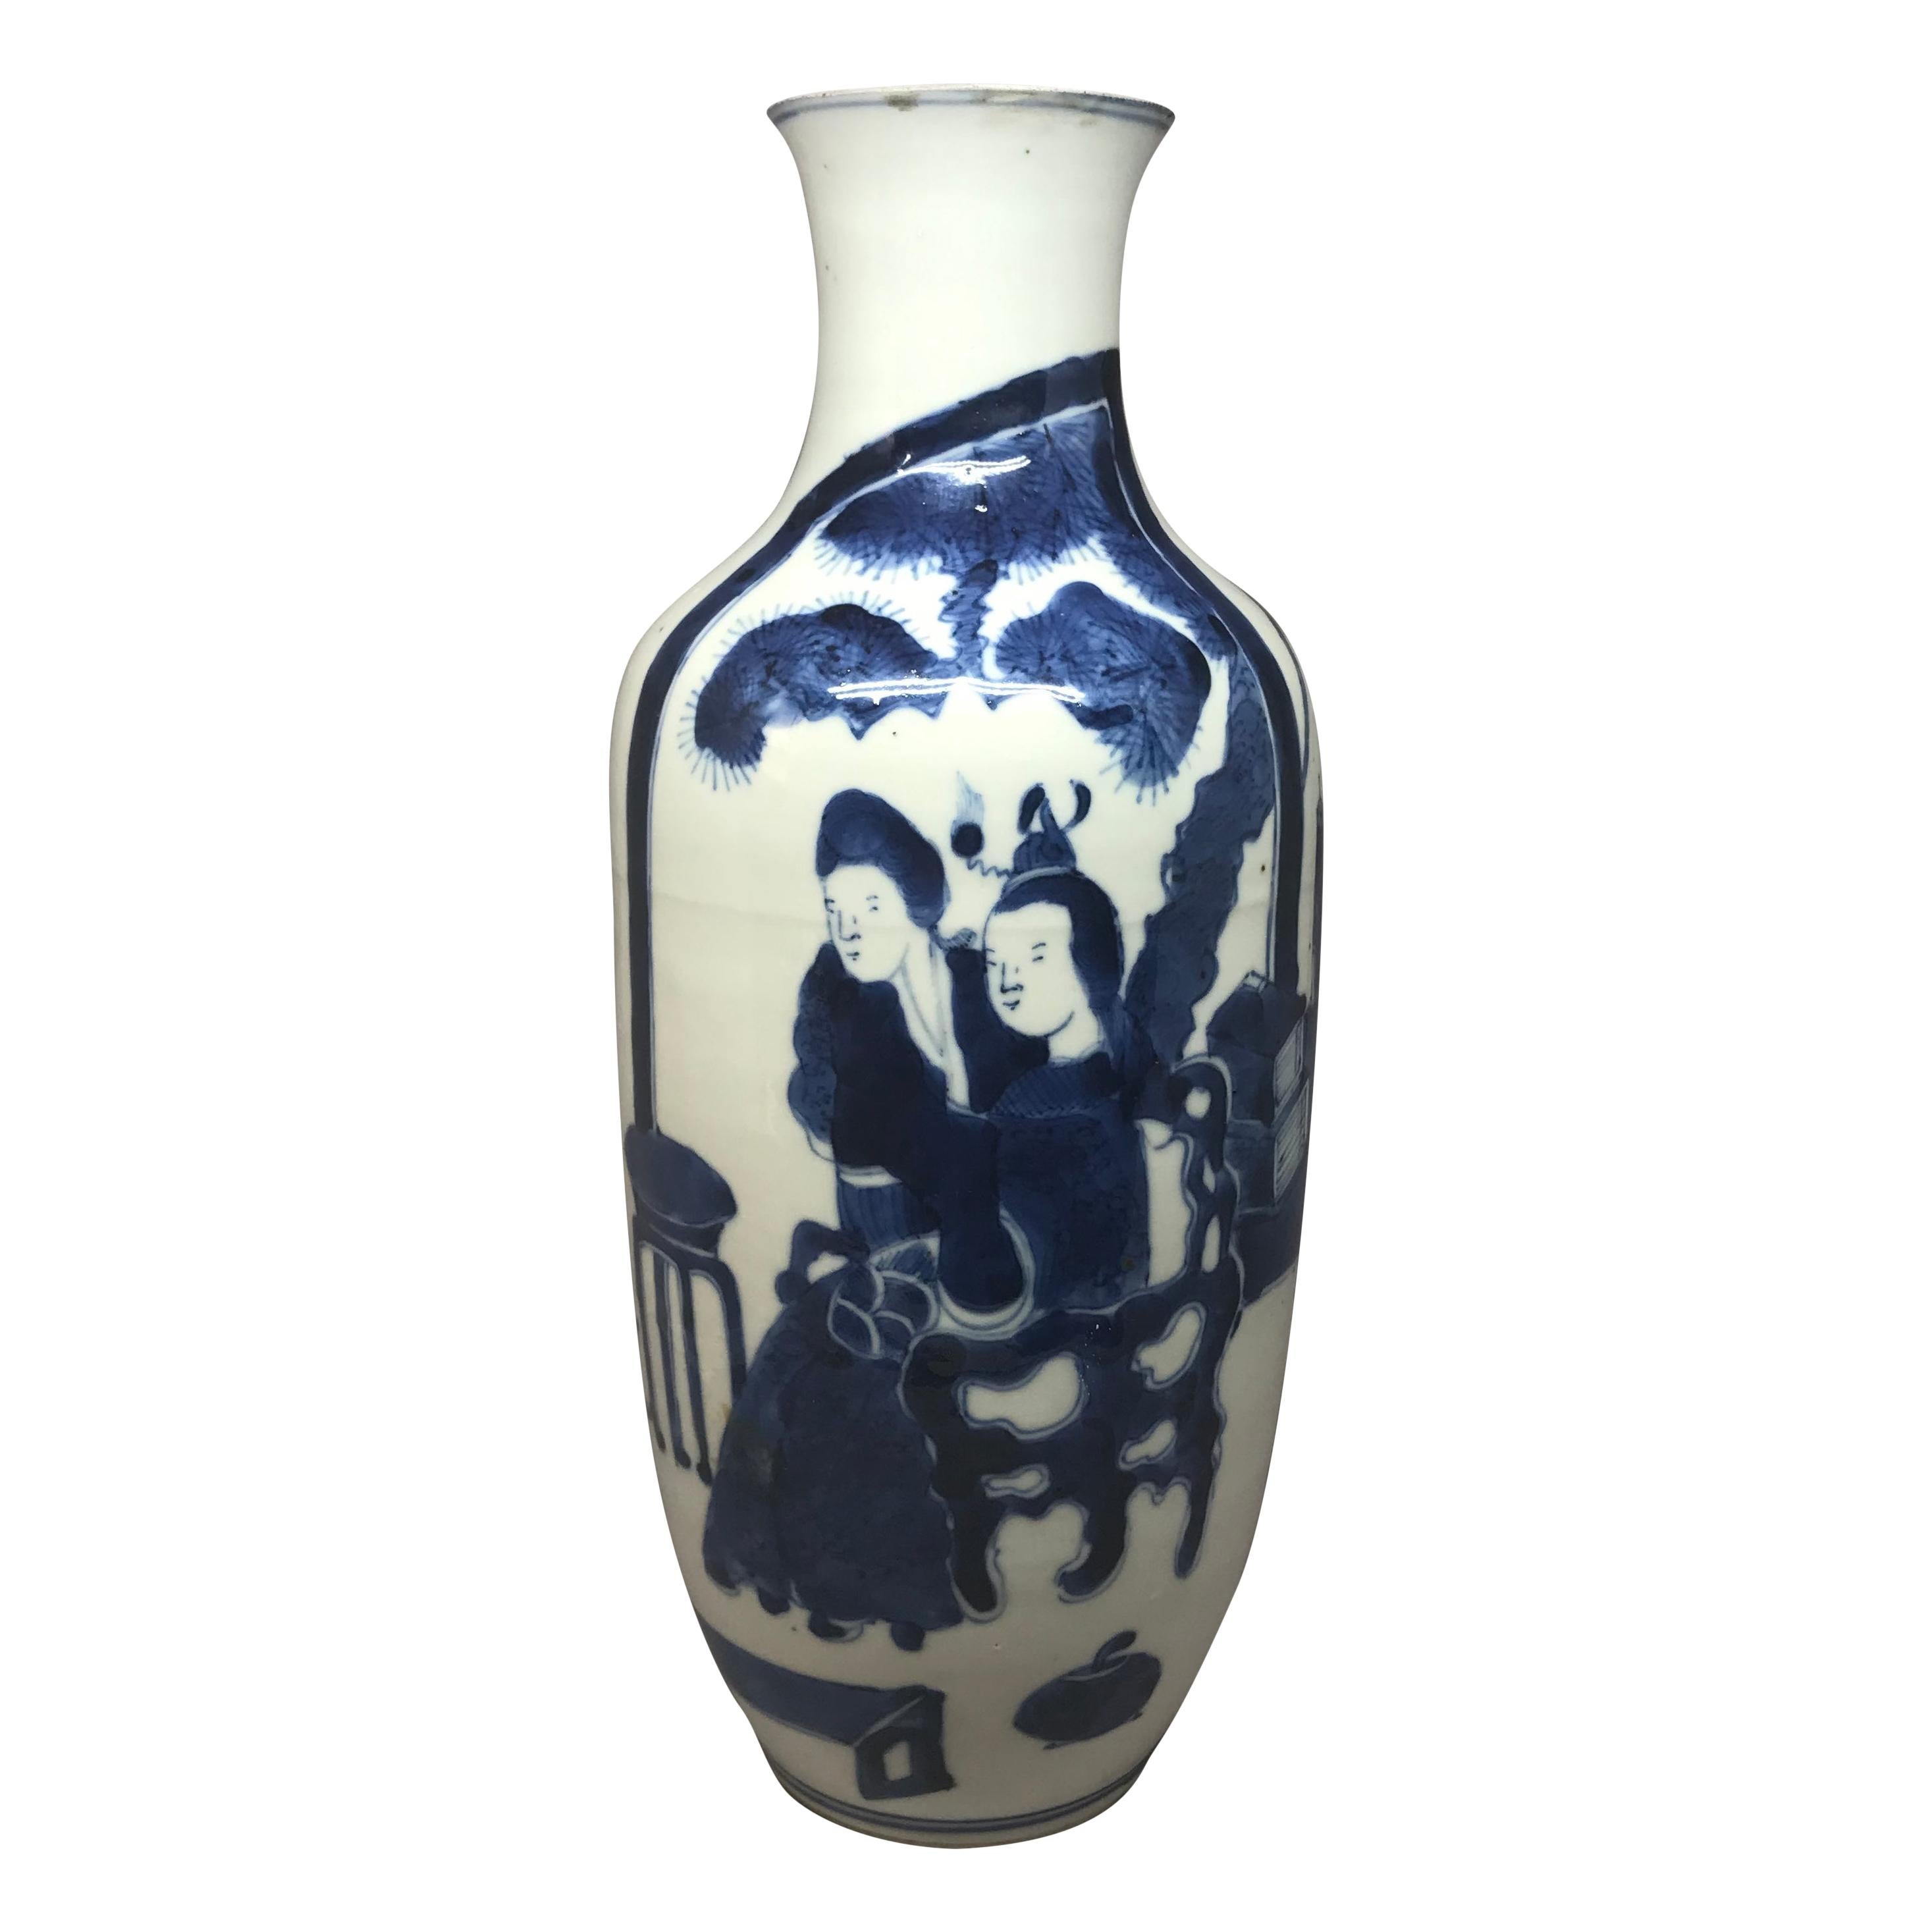 YUBIN Vases for Decor Modern Blue and White Flower Vase Porcelain Chinese Vase China Ming Style Antique Ceramic Decoration Artwork for Living Room Office Study-e W13cmxh24cm